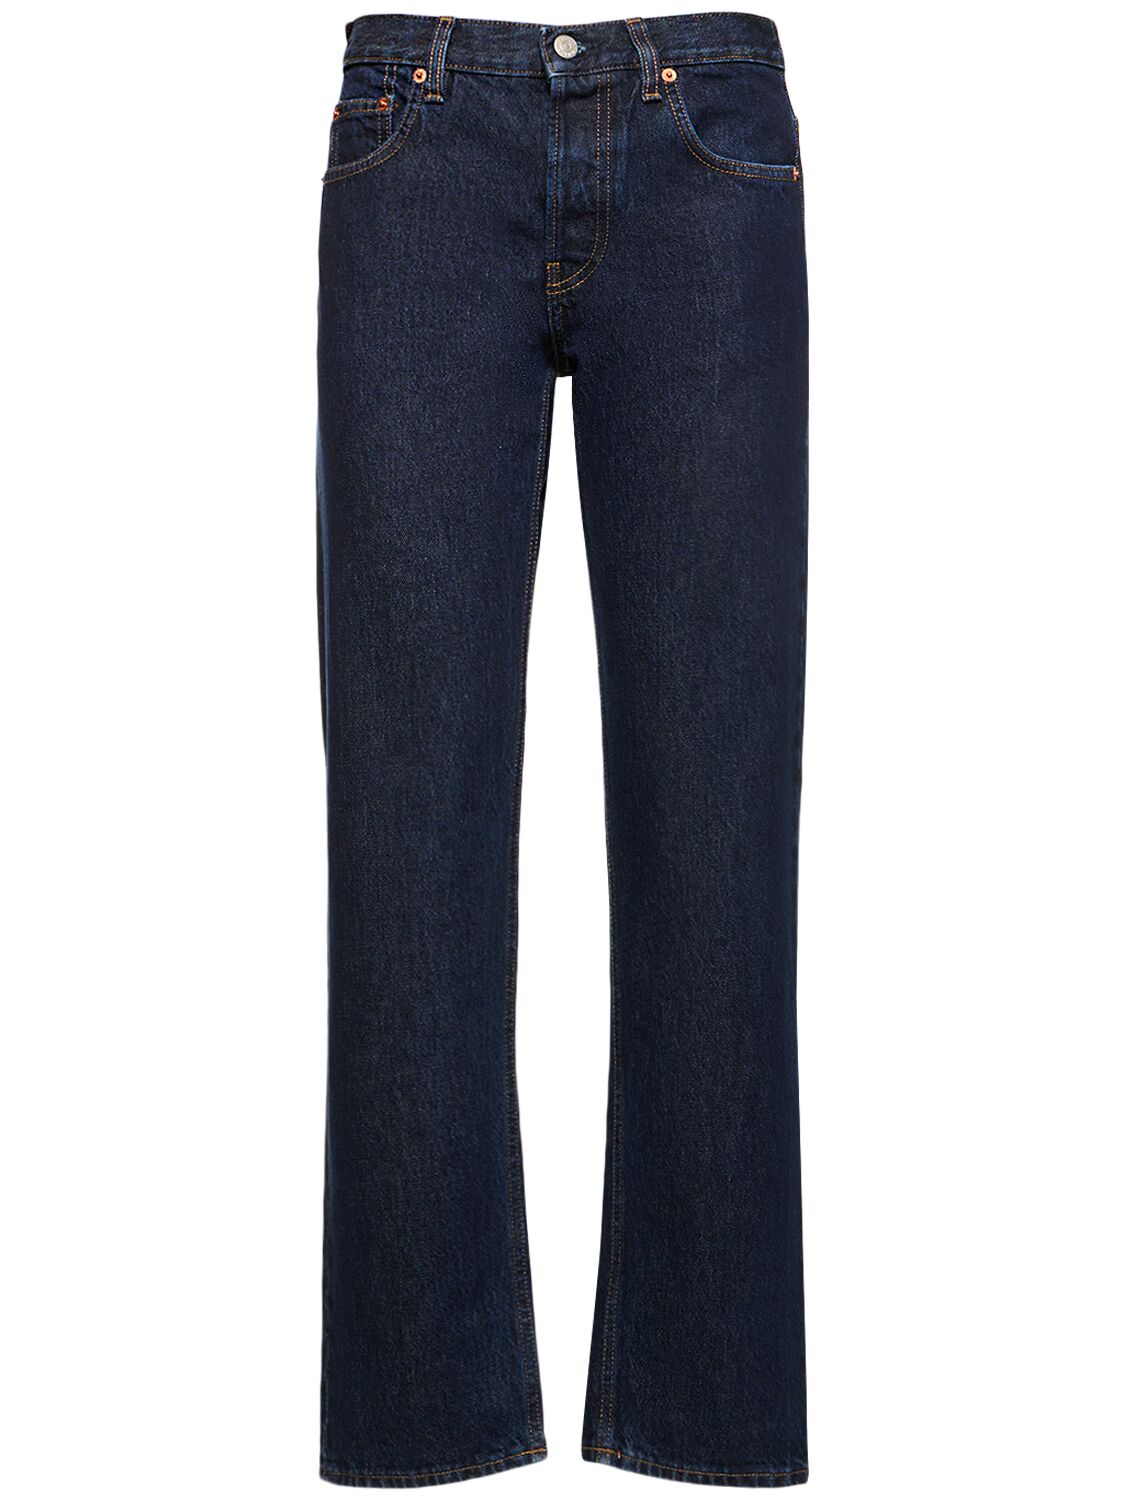 Vintage Fit Denim Jeans